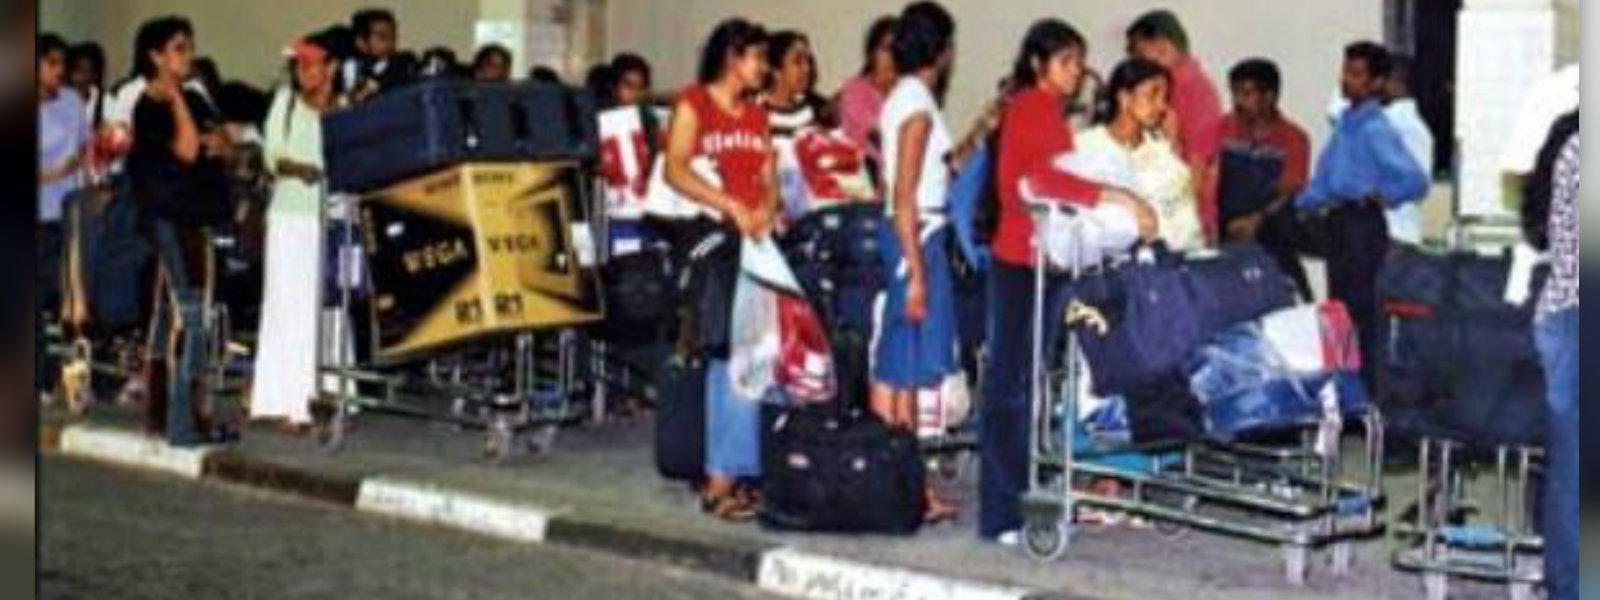 60 migrant workers return to Sri Lanka from Kuwait